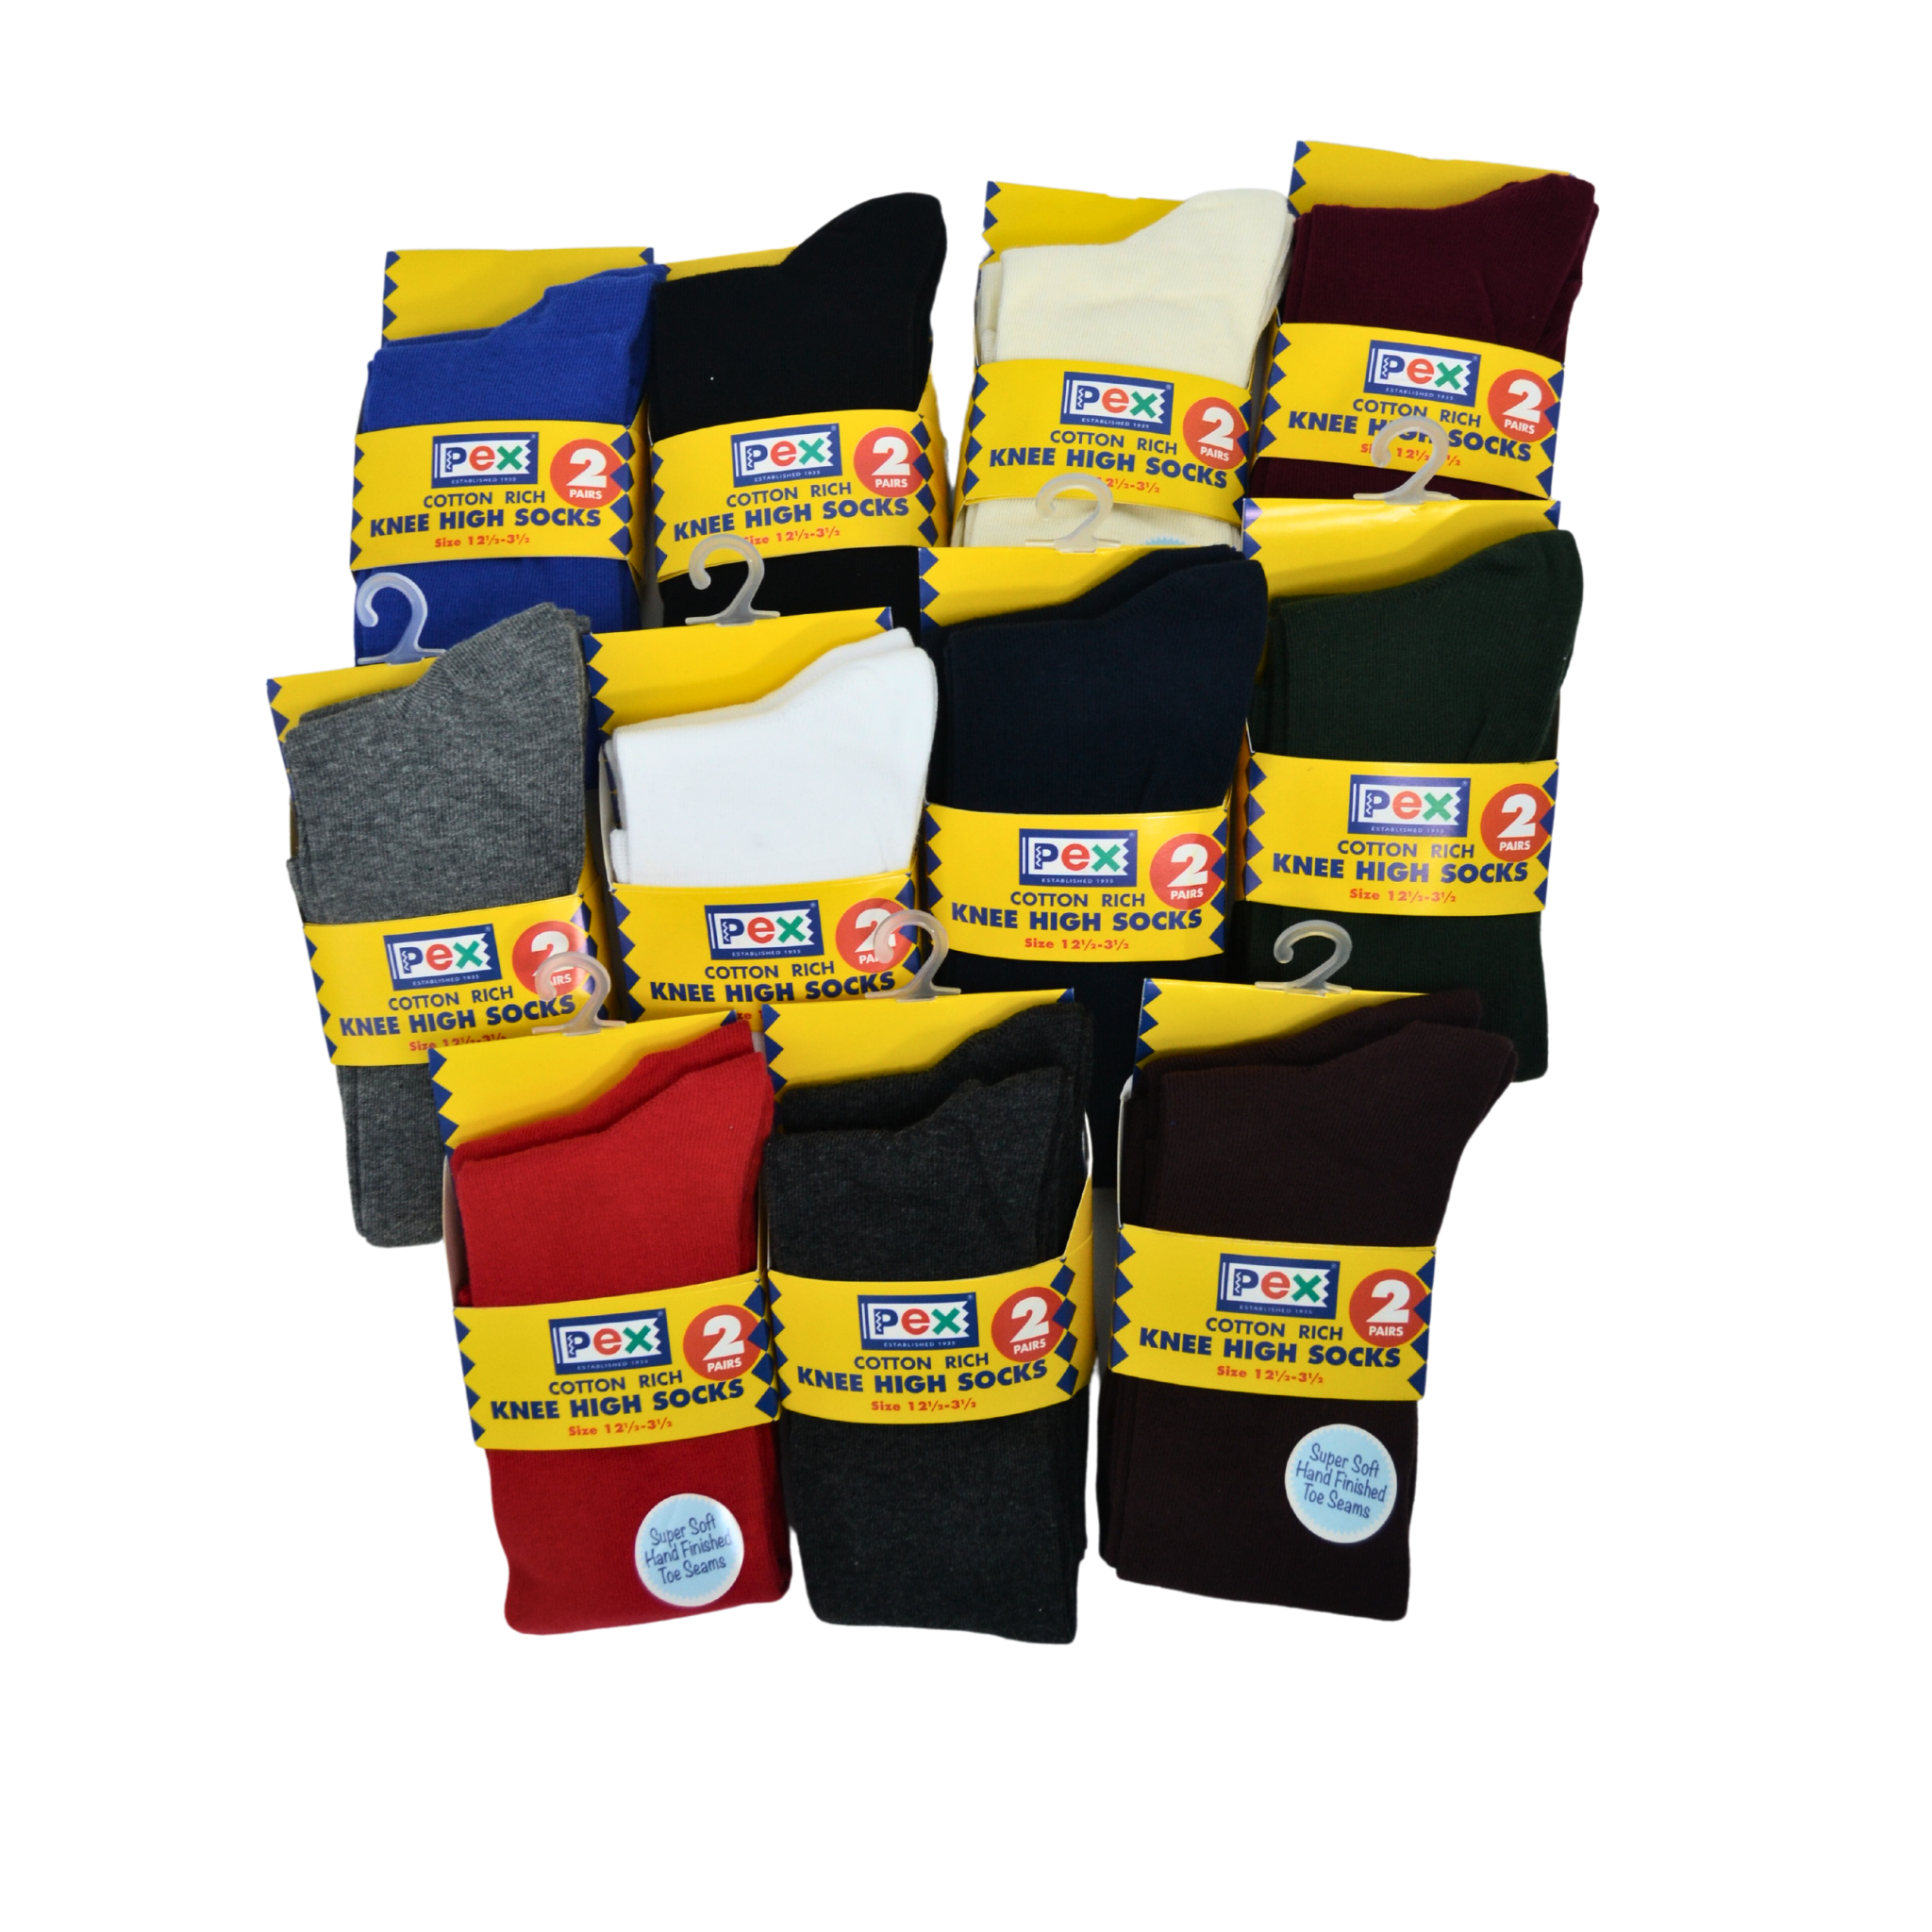 Pex - Knee High Socks with Comfort Toe - 2 pair pack - Kids & Adults